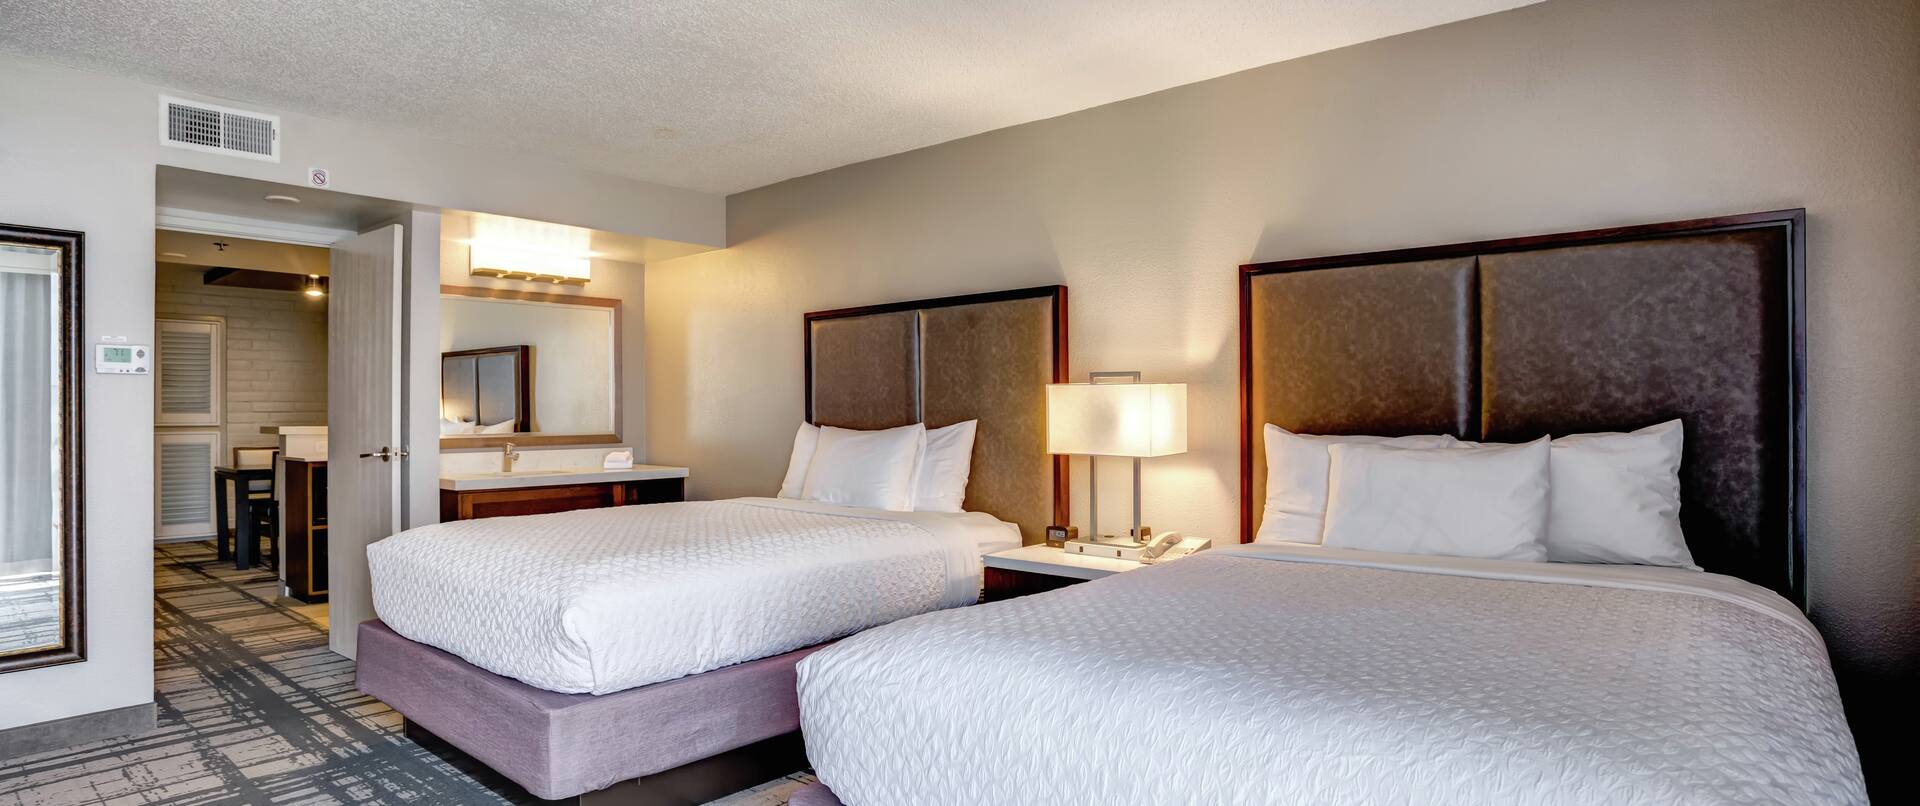 Double Bed Hotel Guestroom Suite